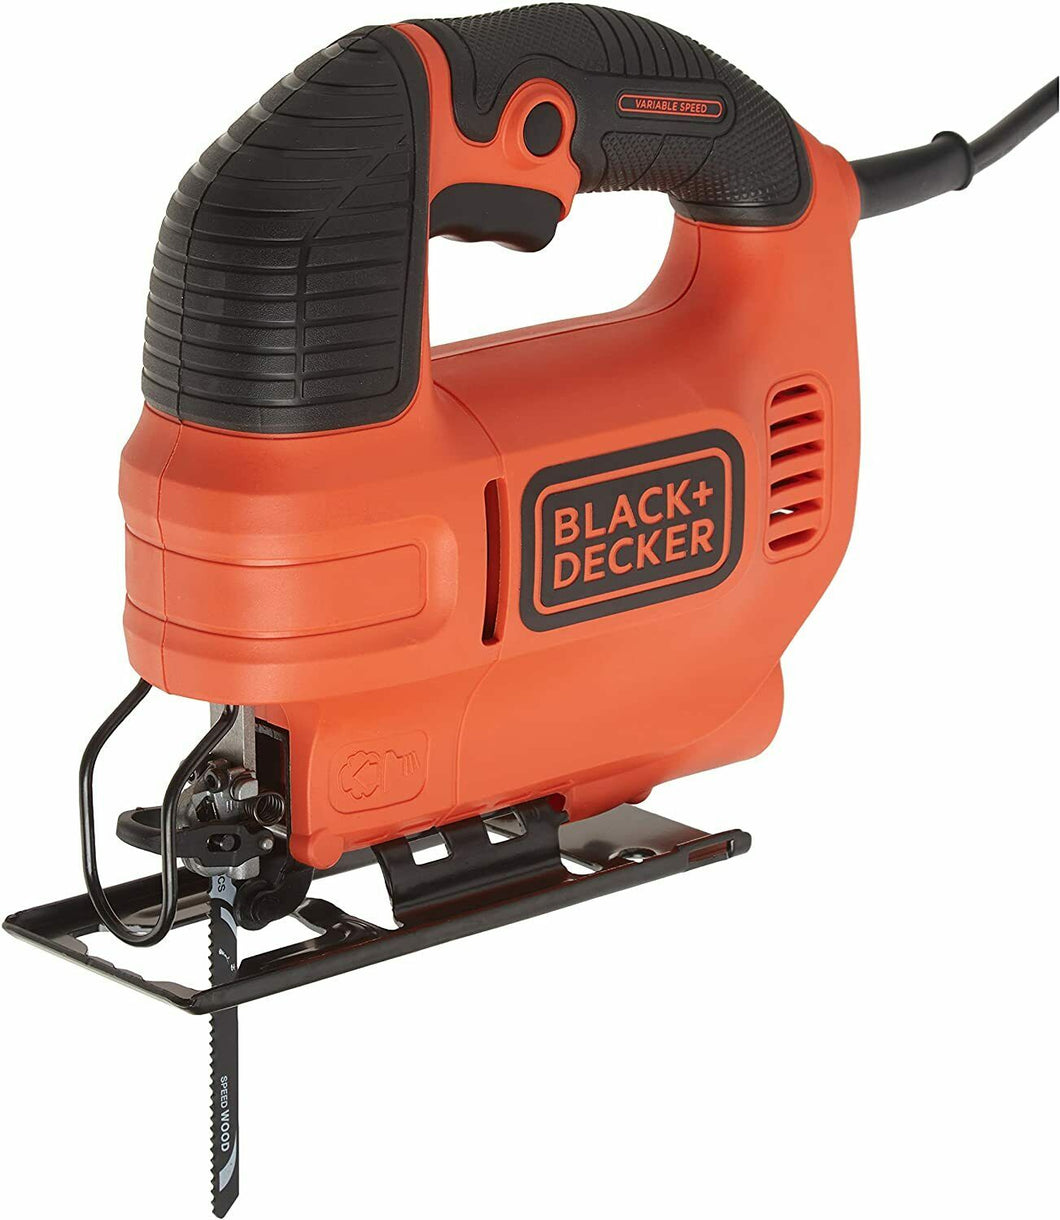 BLACK+DECKER BDEJS300C 4.5 Amp Corded Jig Saw Model Orange/Black